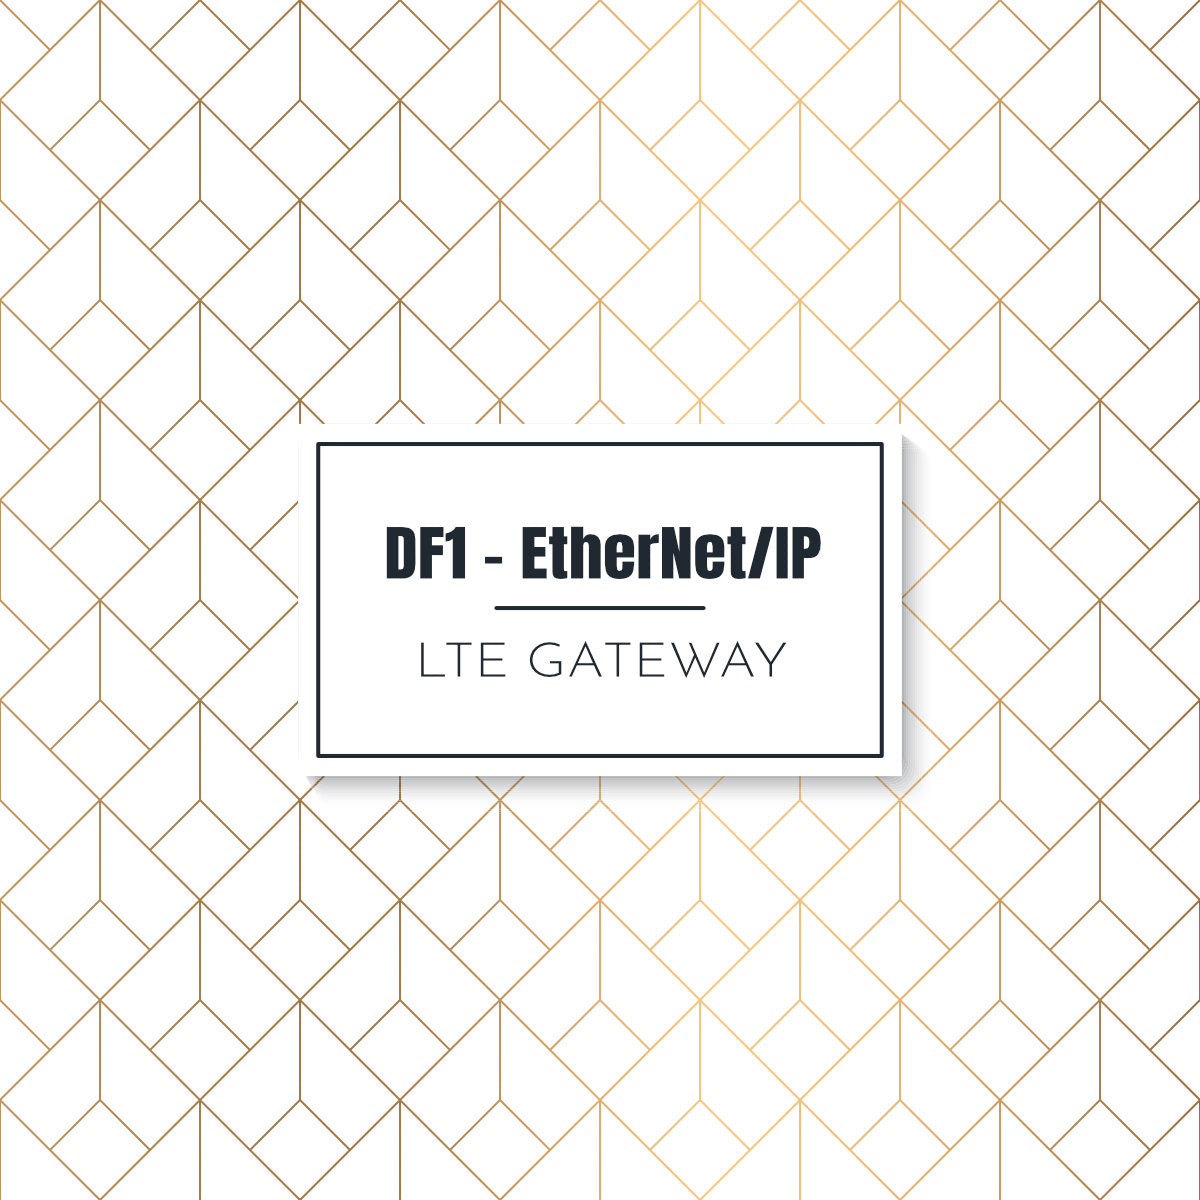 DF1 EtherNet/IP LTE gateway title image